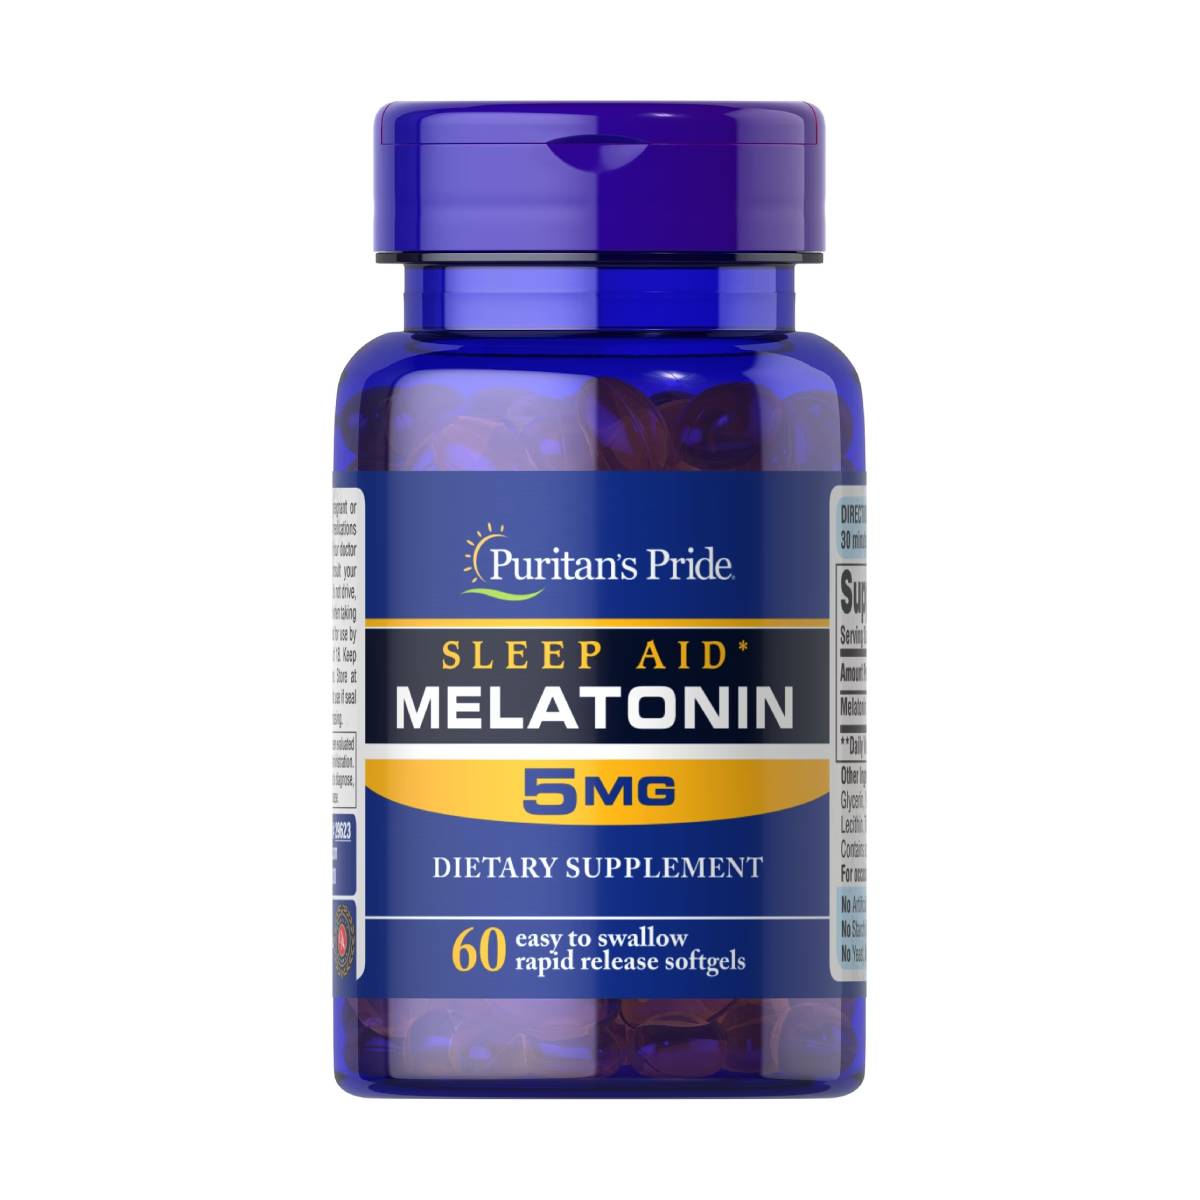 Puritan's Pride, Melatonin 5 mg Sleep Aid